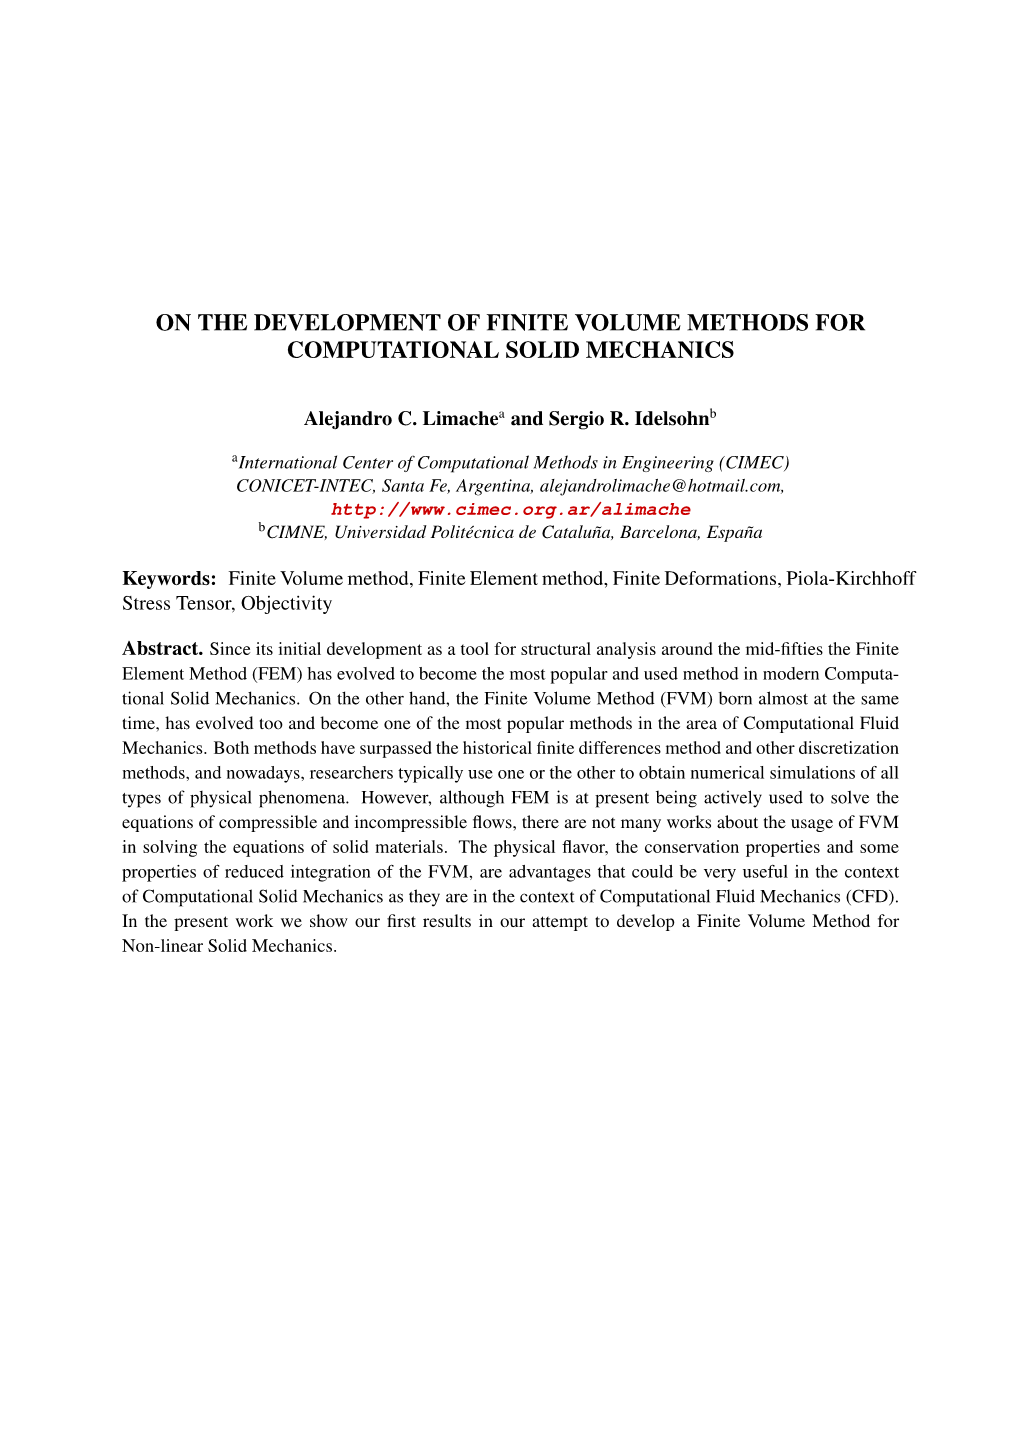 On the Development of Finite Volume Methods for Computational Solid Mechanics